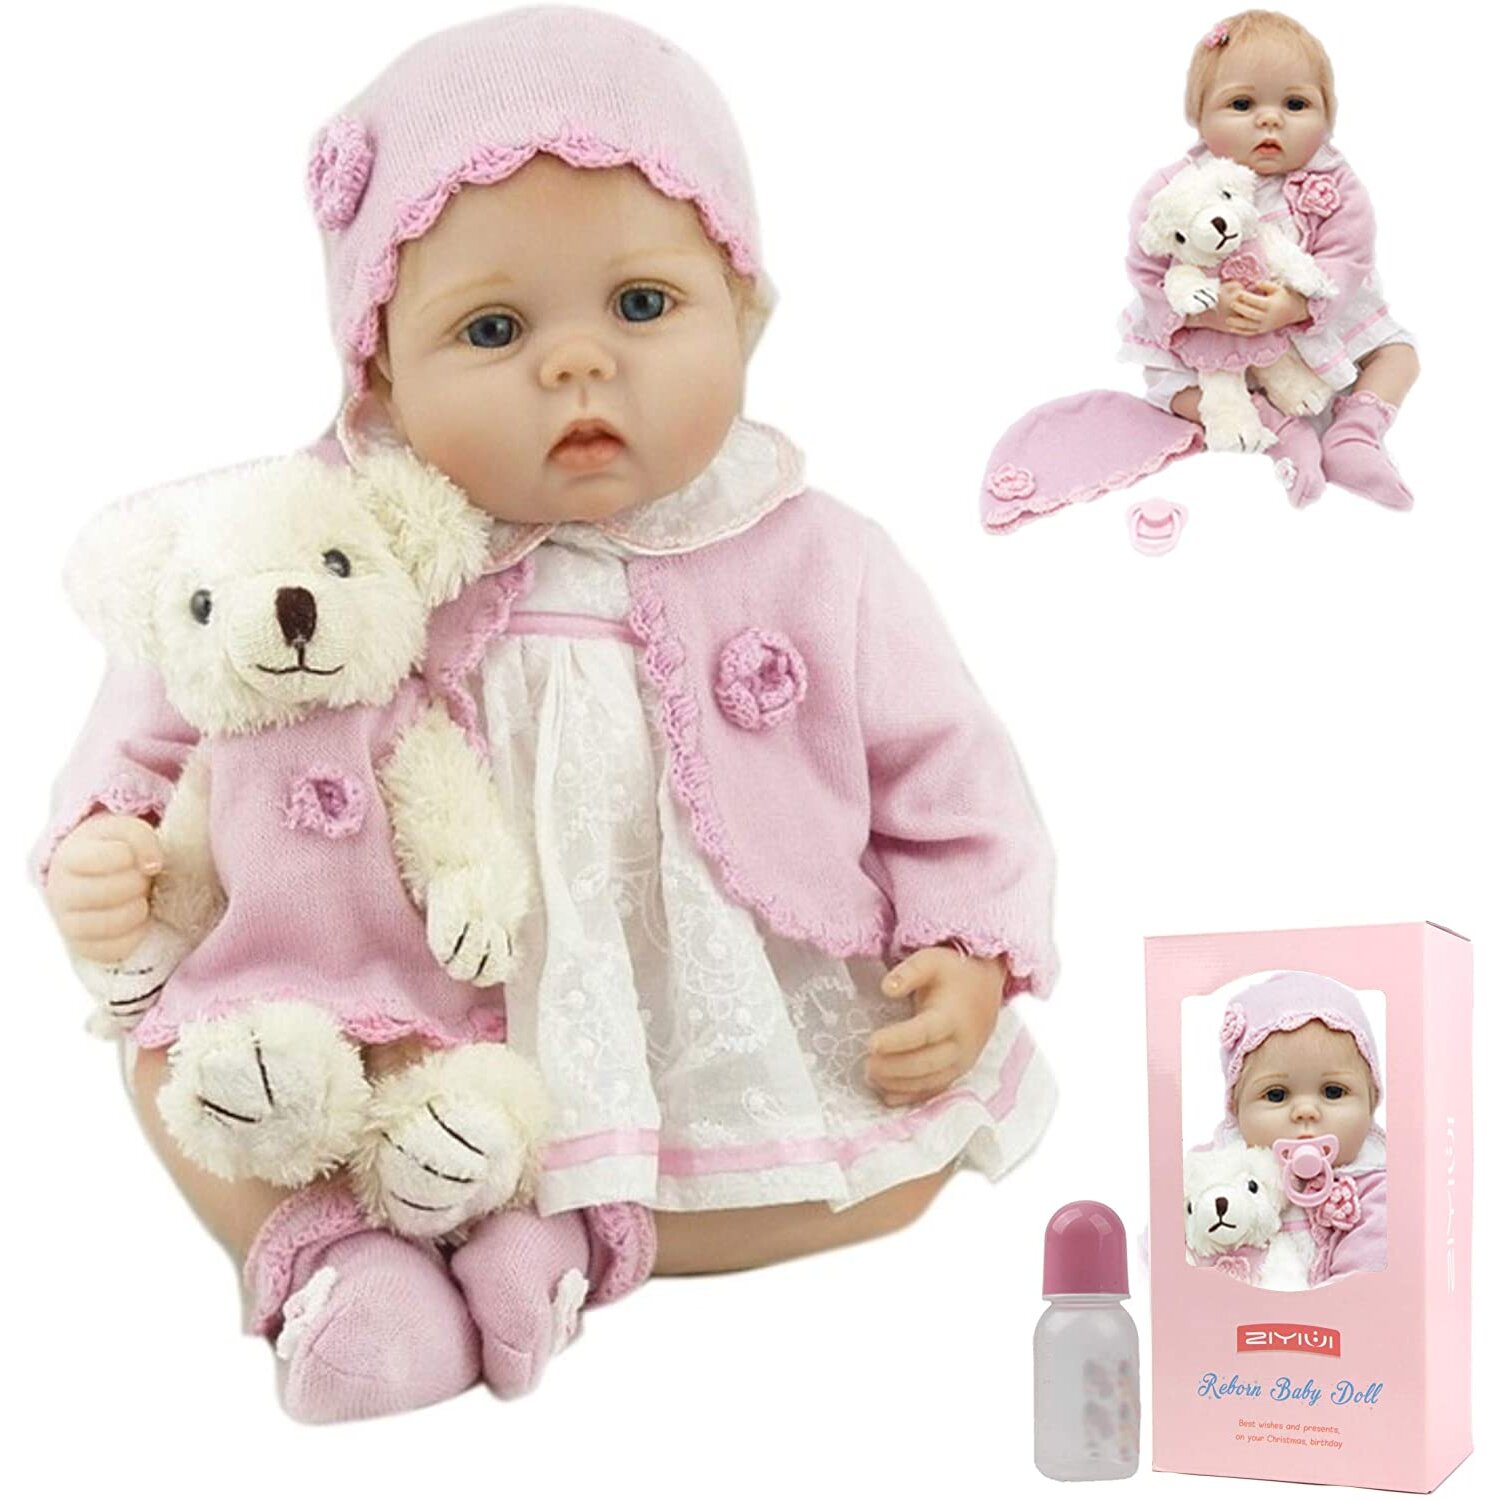 Real Looking Lifelike Reborn Baby Doll 22"Newborn Baby Soft Vinyl Silicone Realistic Handmade Baby girl Birthday gift for children